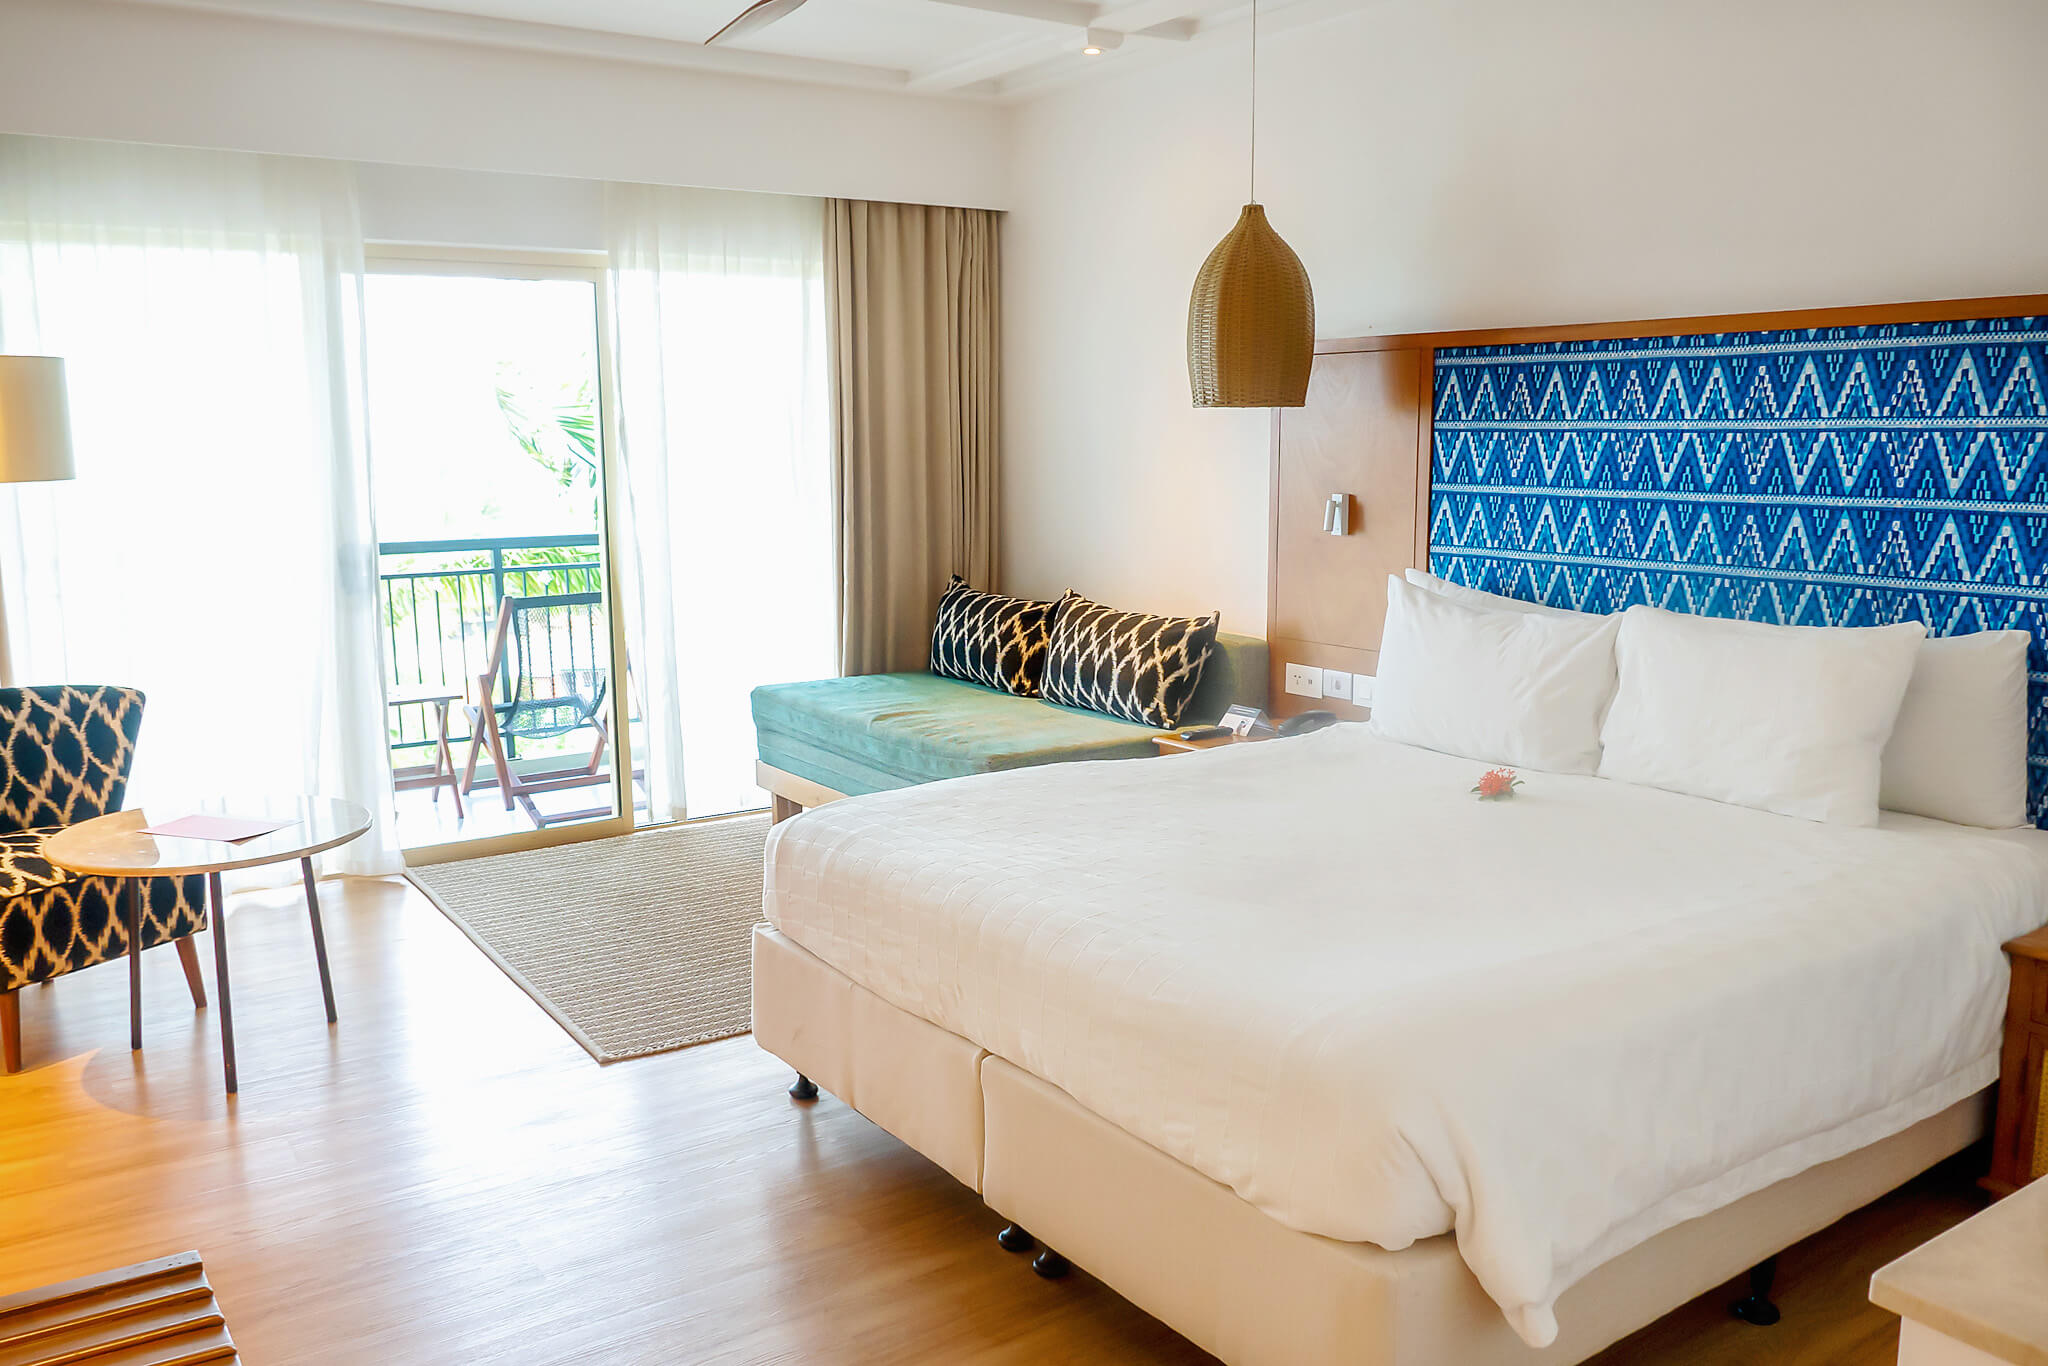 Rooms at Outrigger Fiji resort